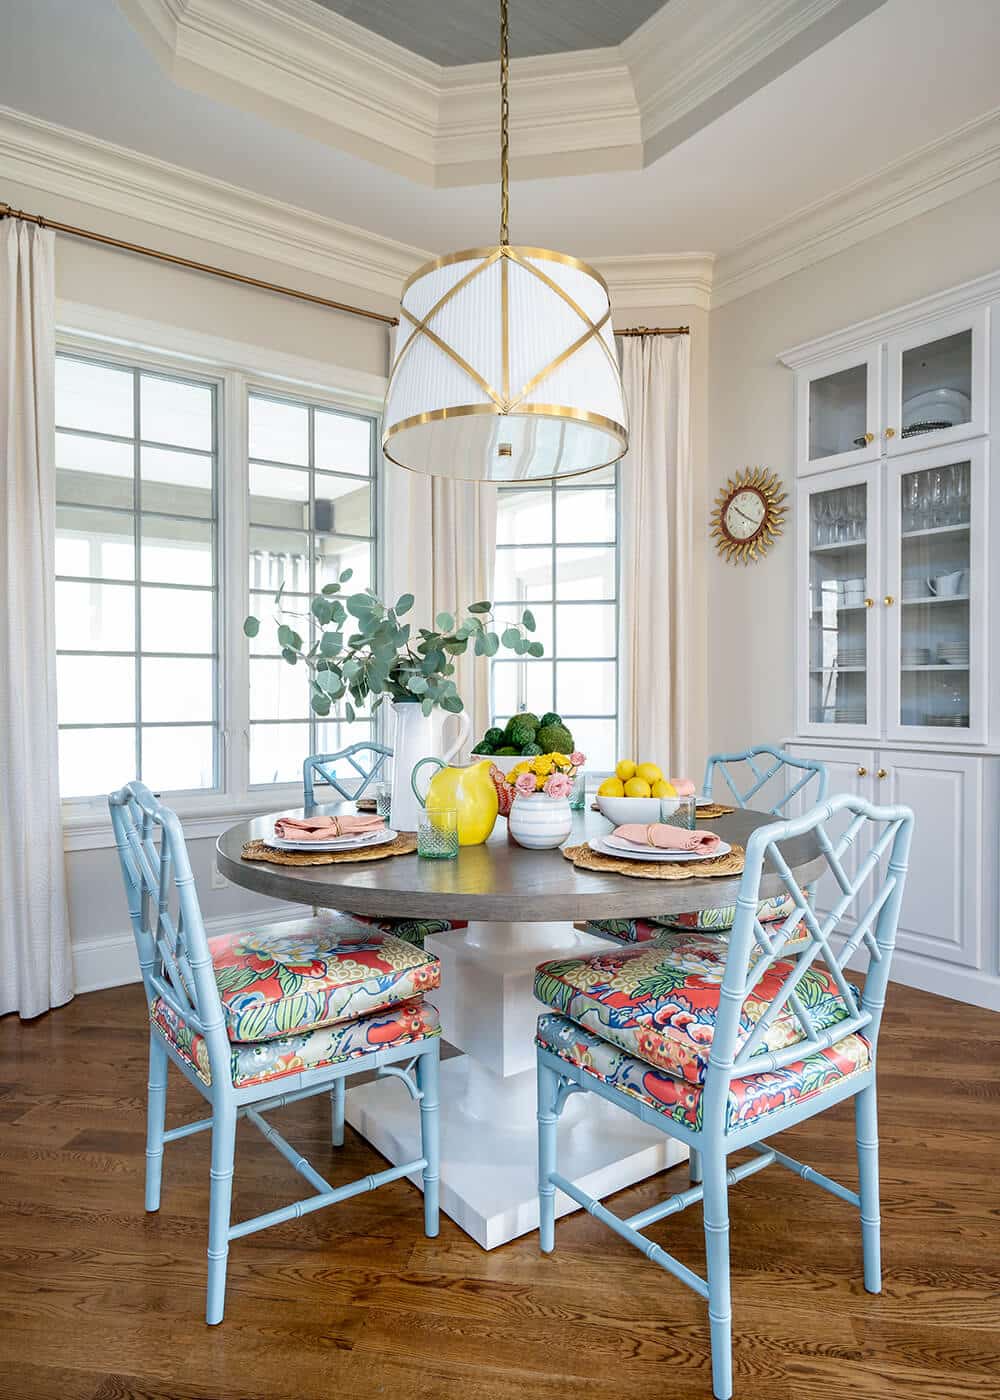 Laney Reusch Interior Design - Cincinnati Interior Designer - eat in kitchen with floral seat covers